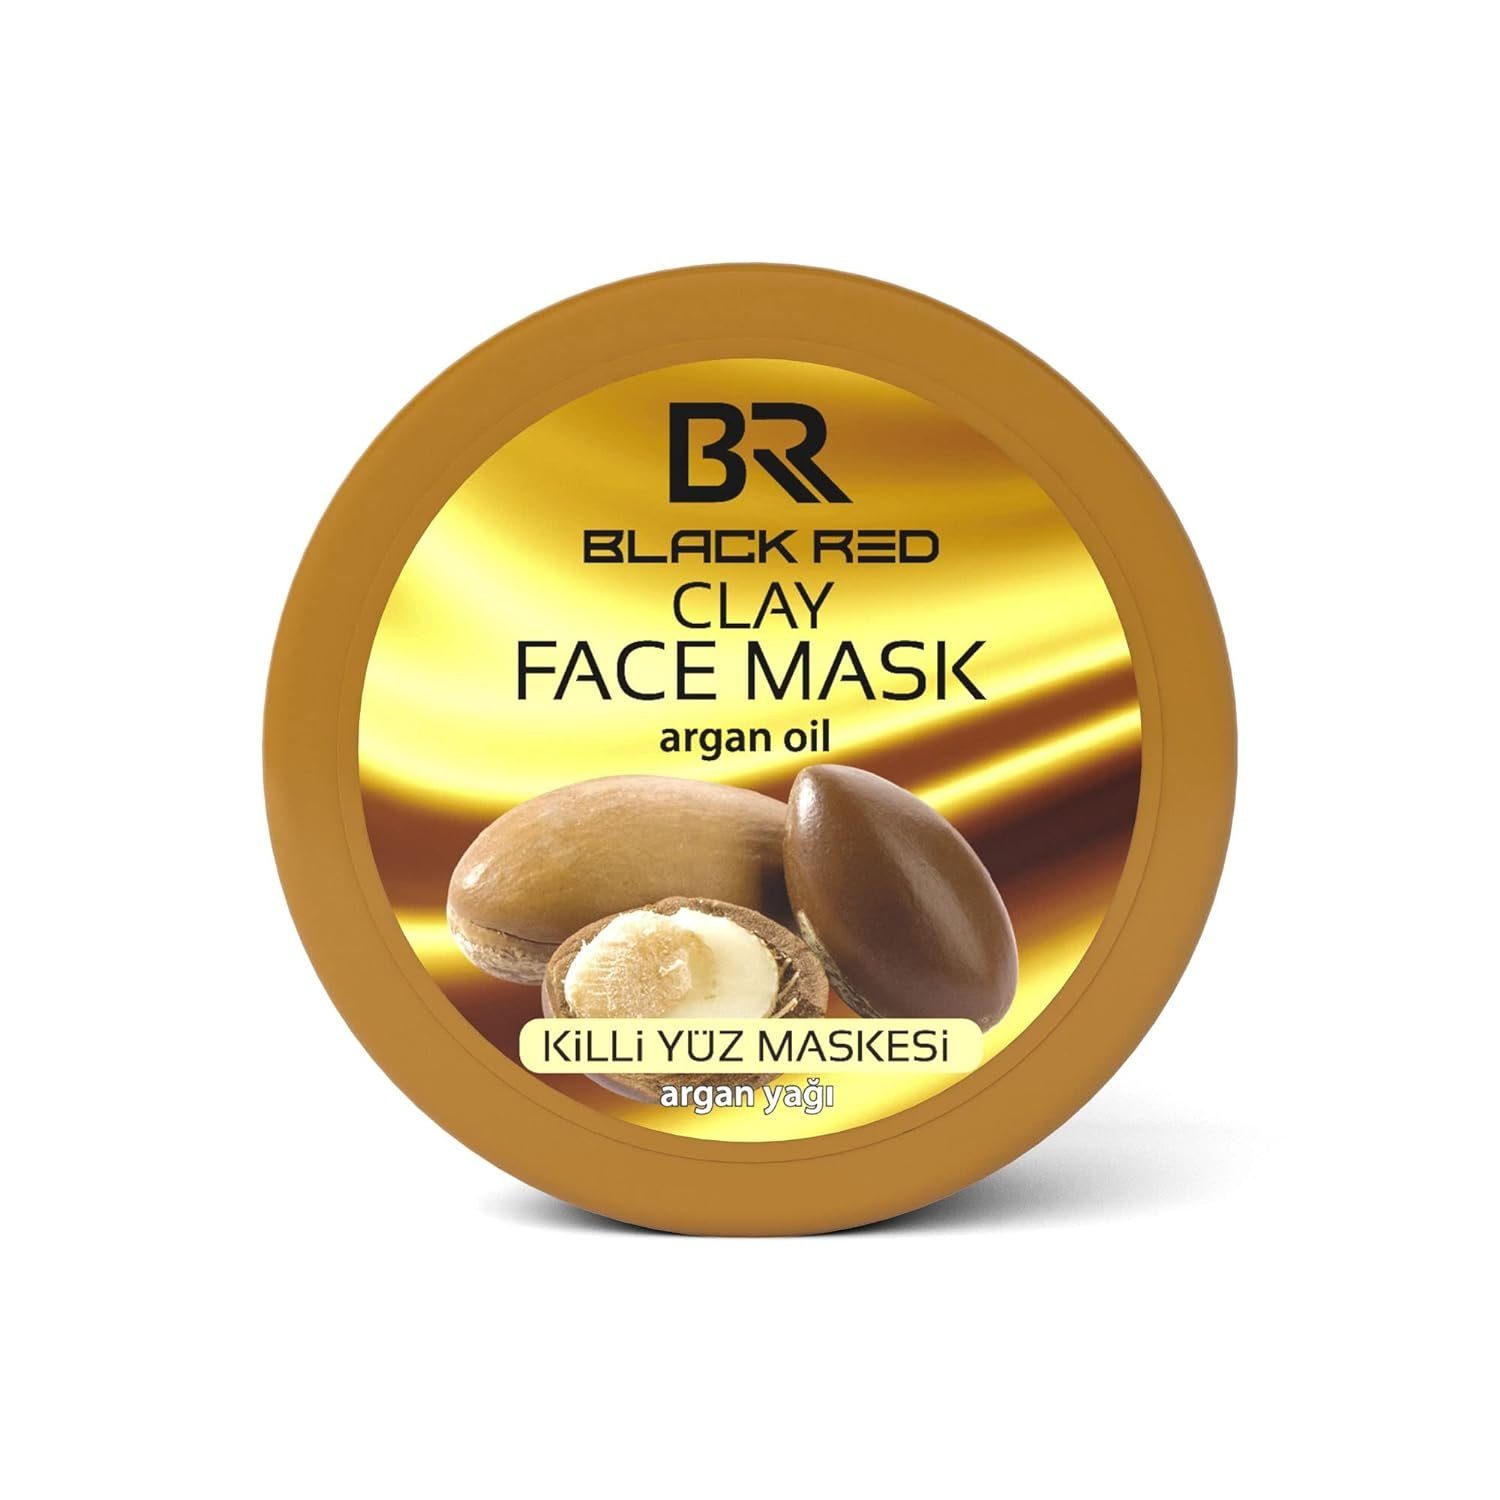 Dora Kozmetik Gesichtsmaske Face & Oil Argan Clay 400g Red Black Mask